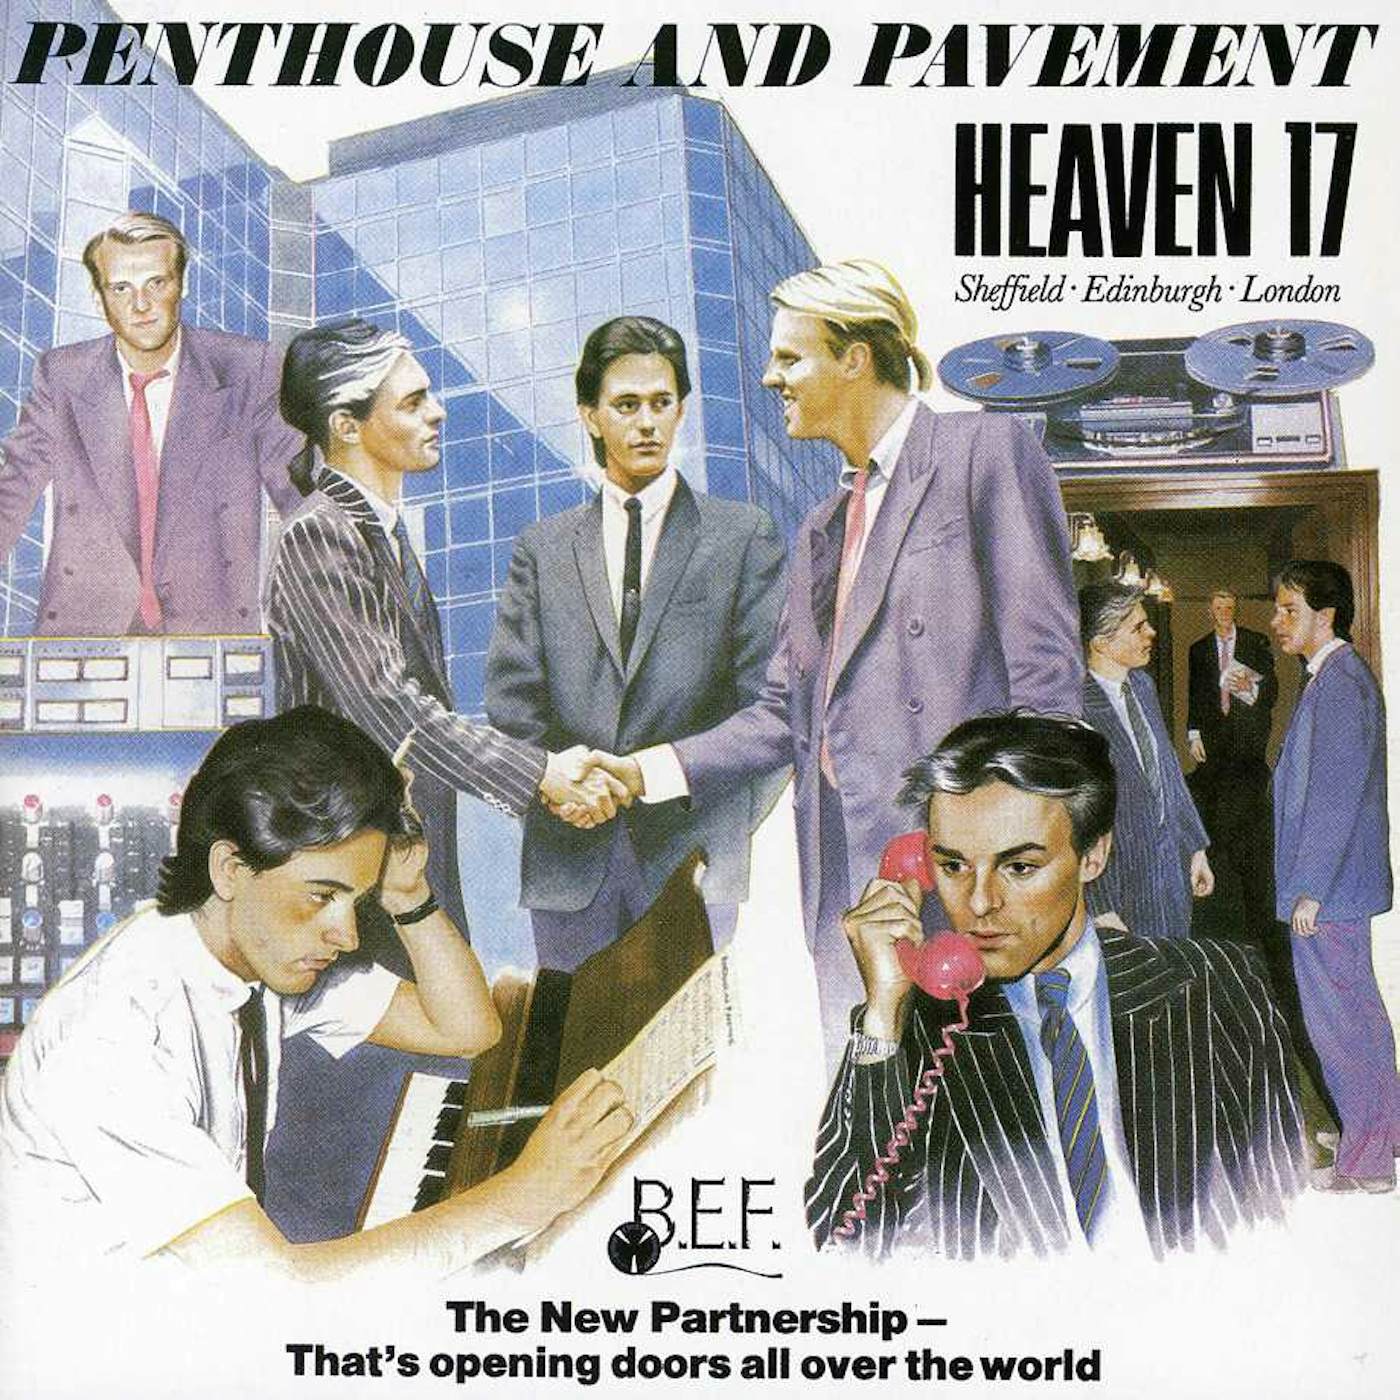 Heaven 17 PENTHOUSE & PAVEMENT CD